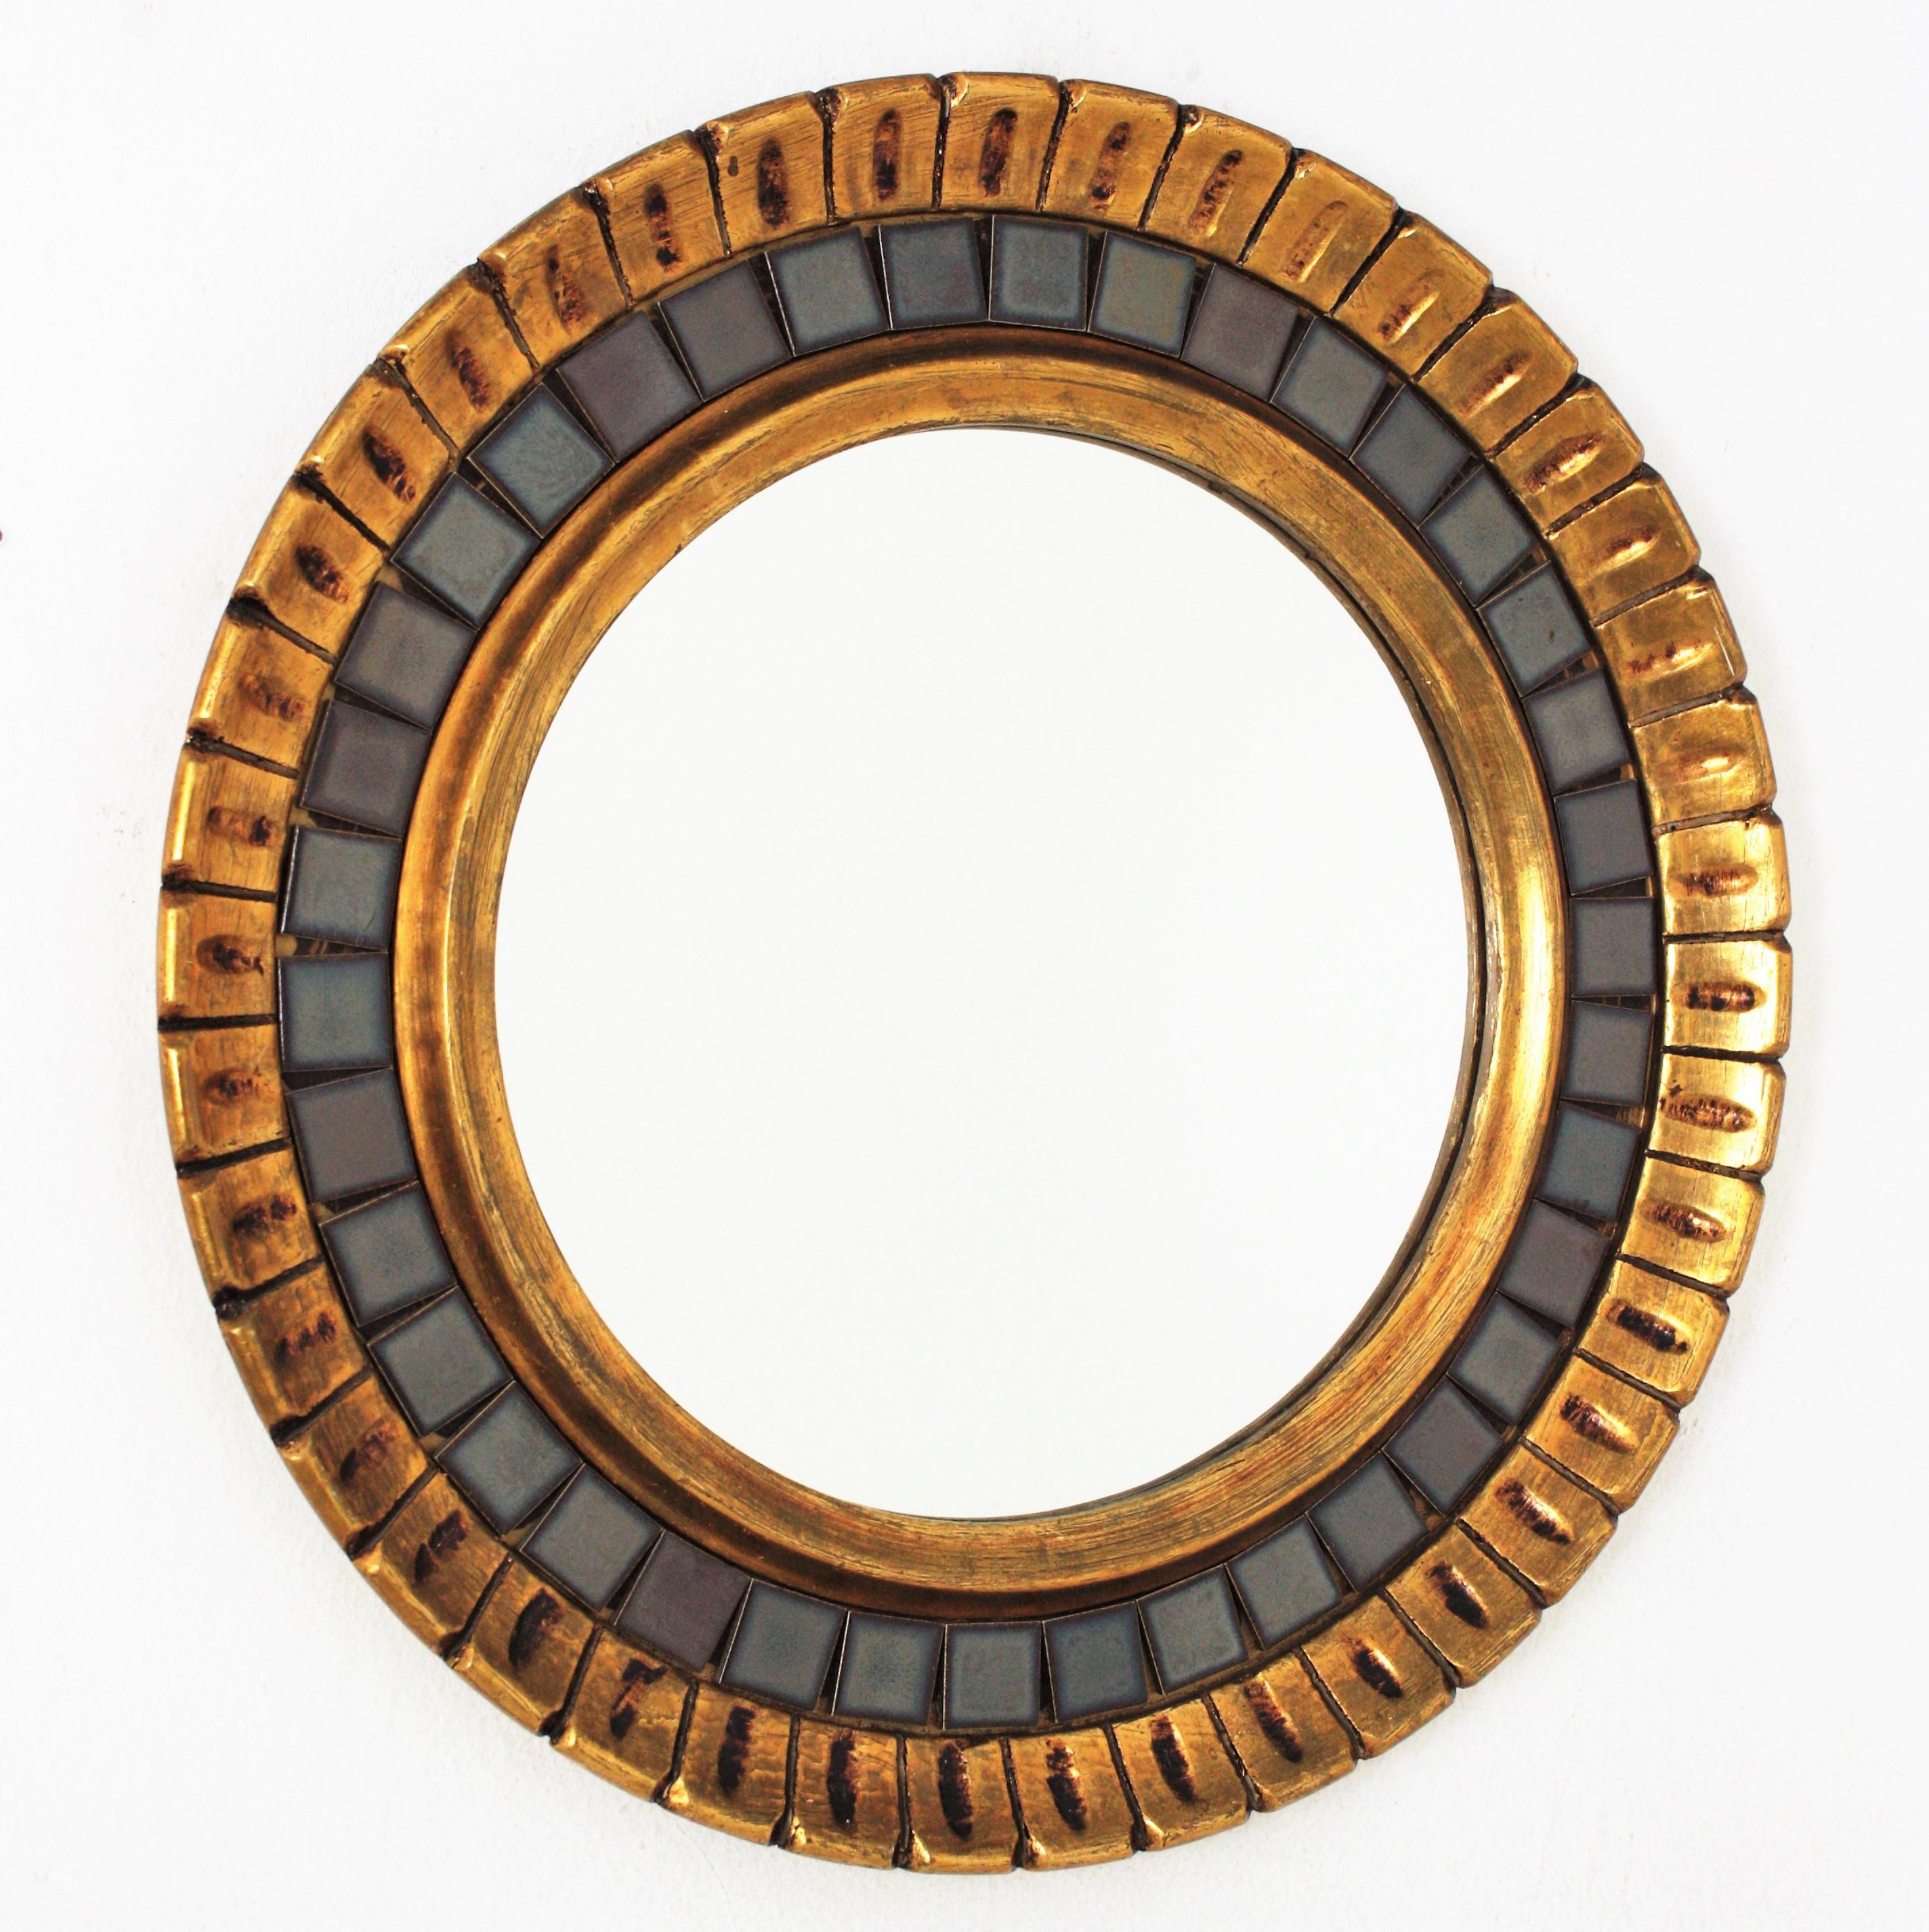 Giltwood round mirror with black ceramic Tiles, Spain, 1960s
Overall measures: 59,5 cm diameter x 4 cm height
Glass diameter: 50 cm.